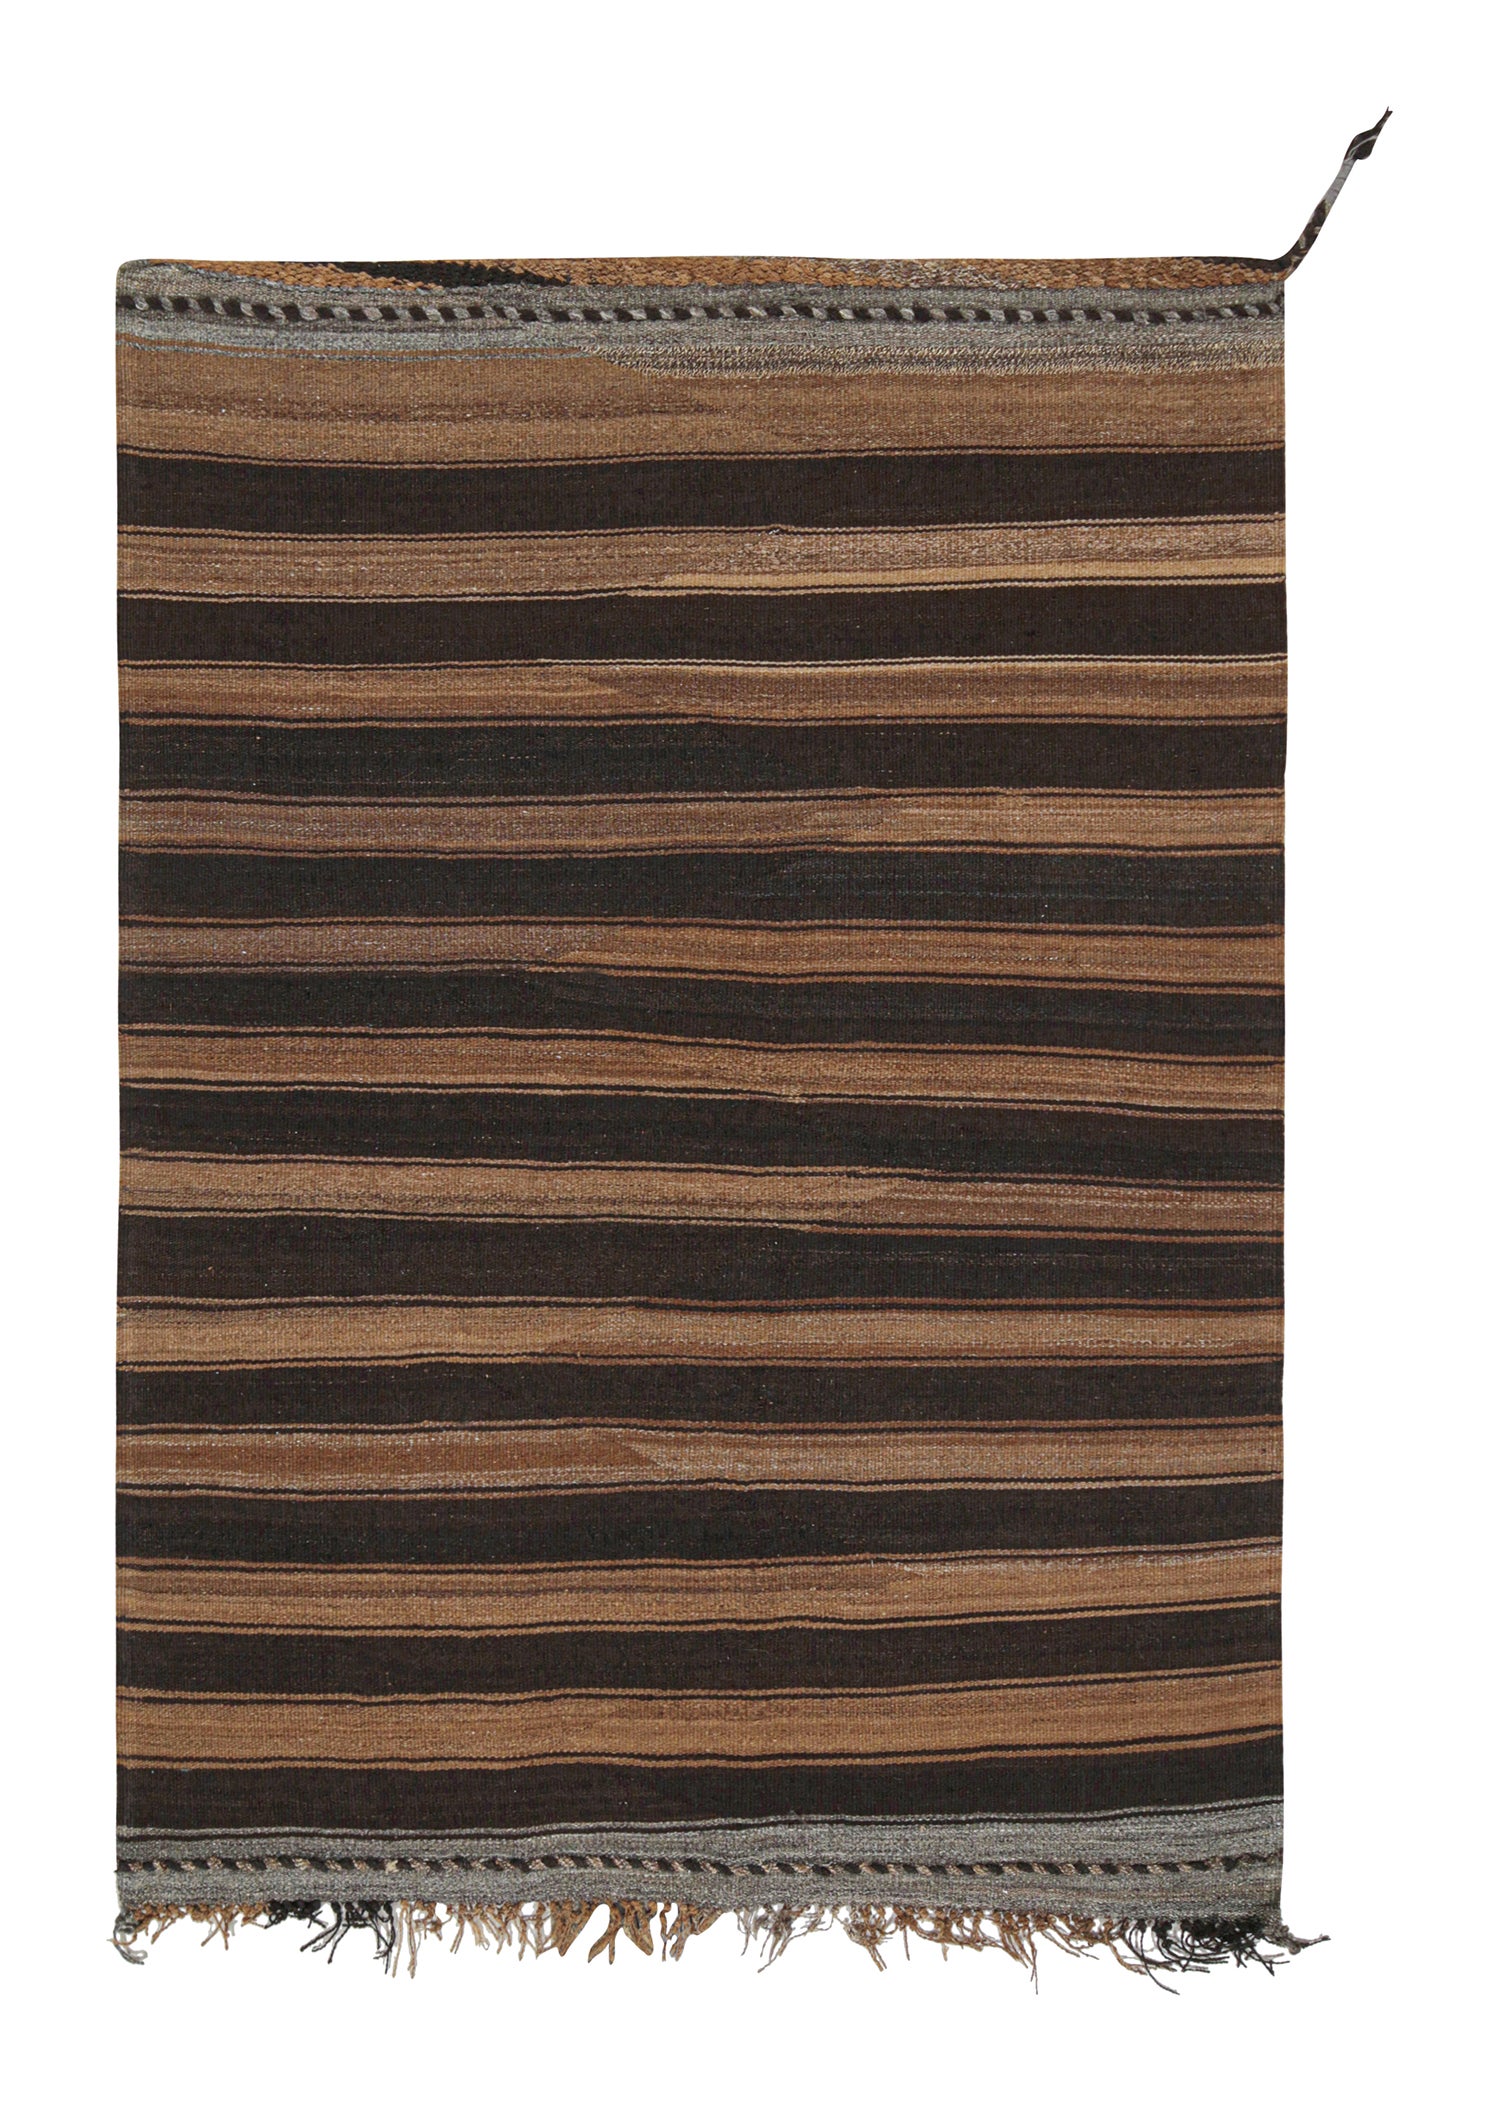 Vintage Persian Tribal Kilim in Brown and Gray Stripes by Rug & Kilim